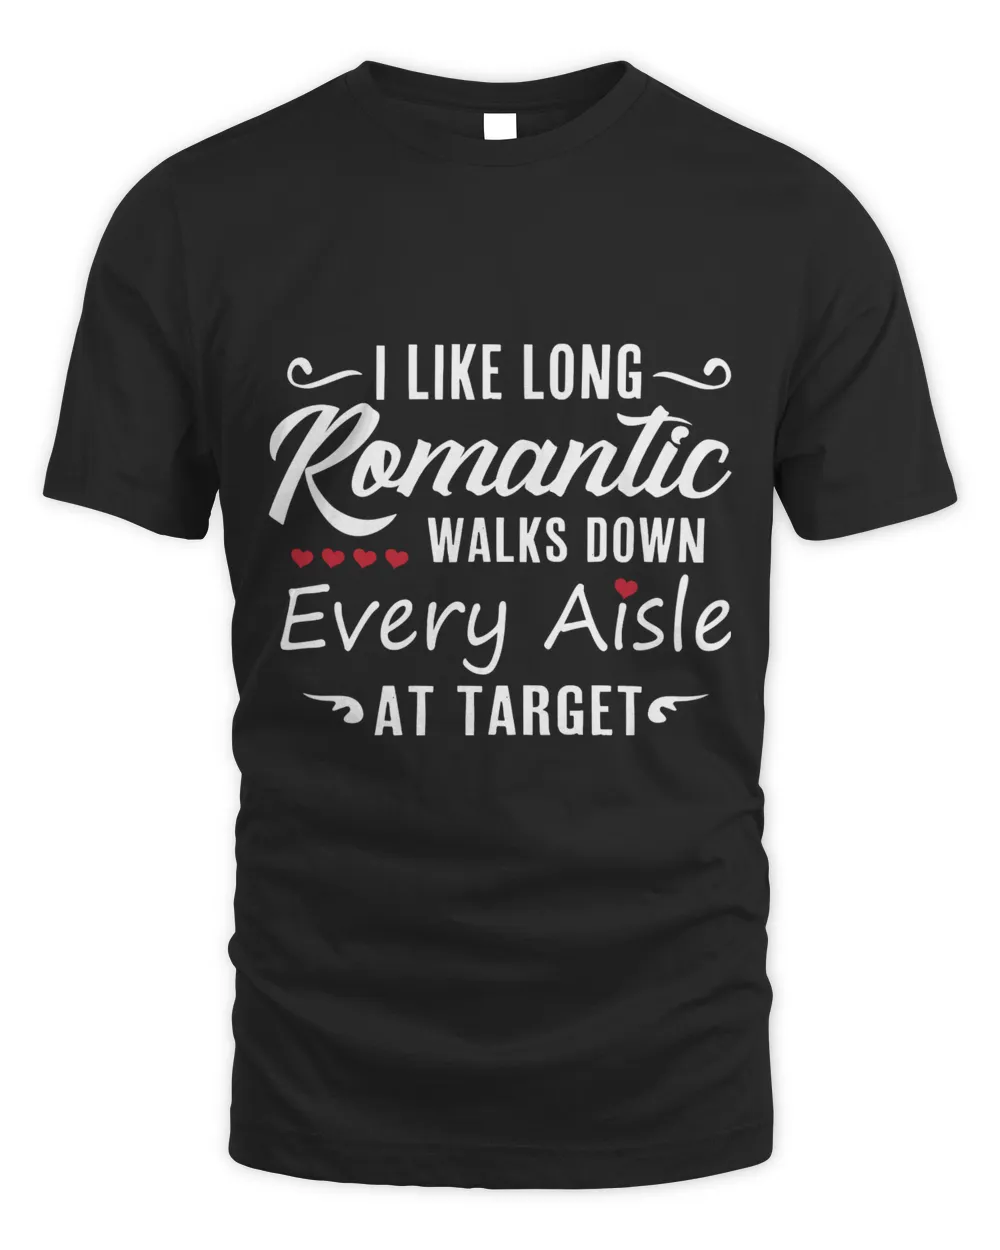 I like long romantic walks down every aisle at target